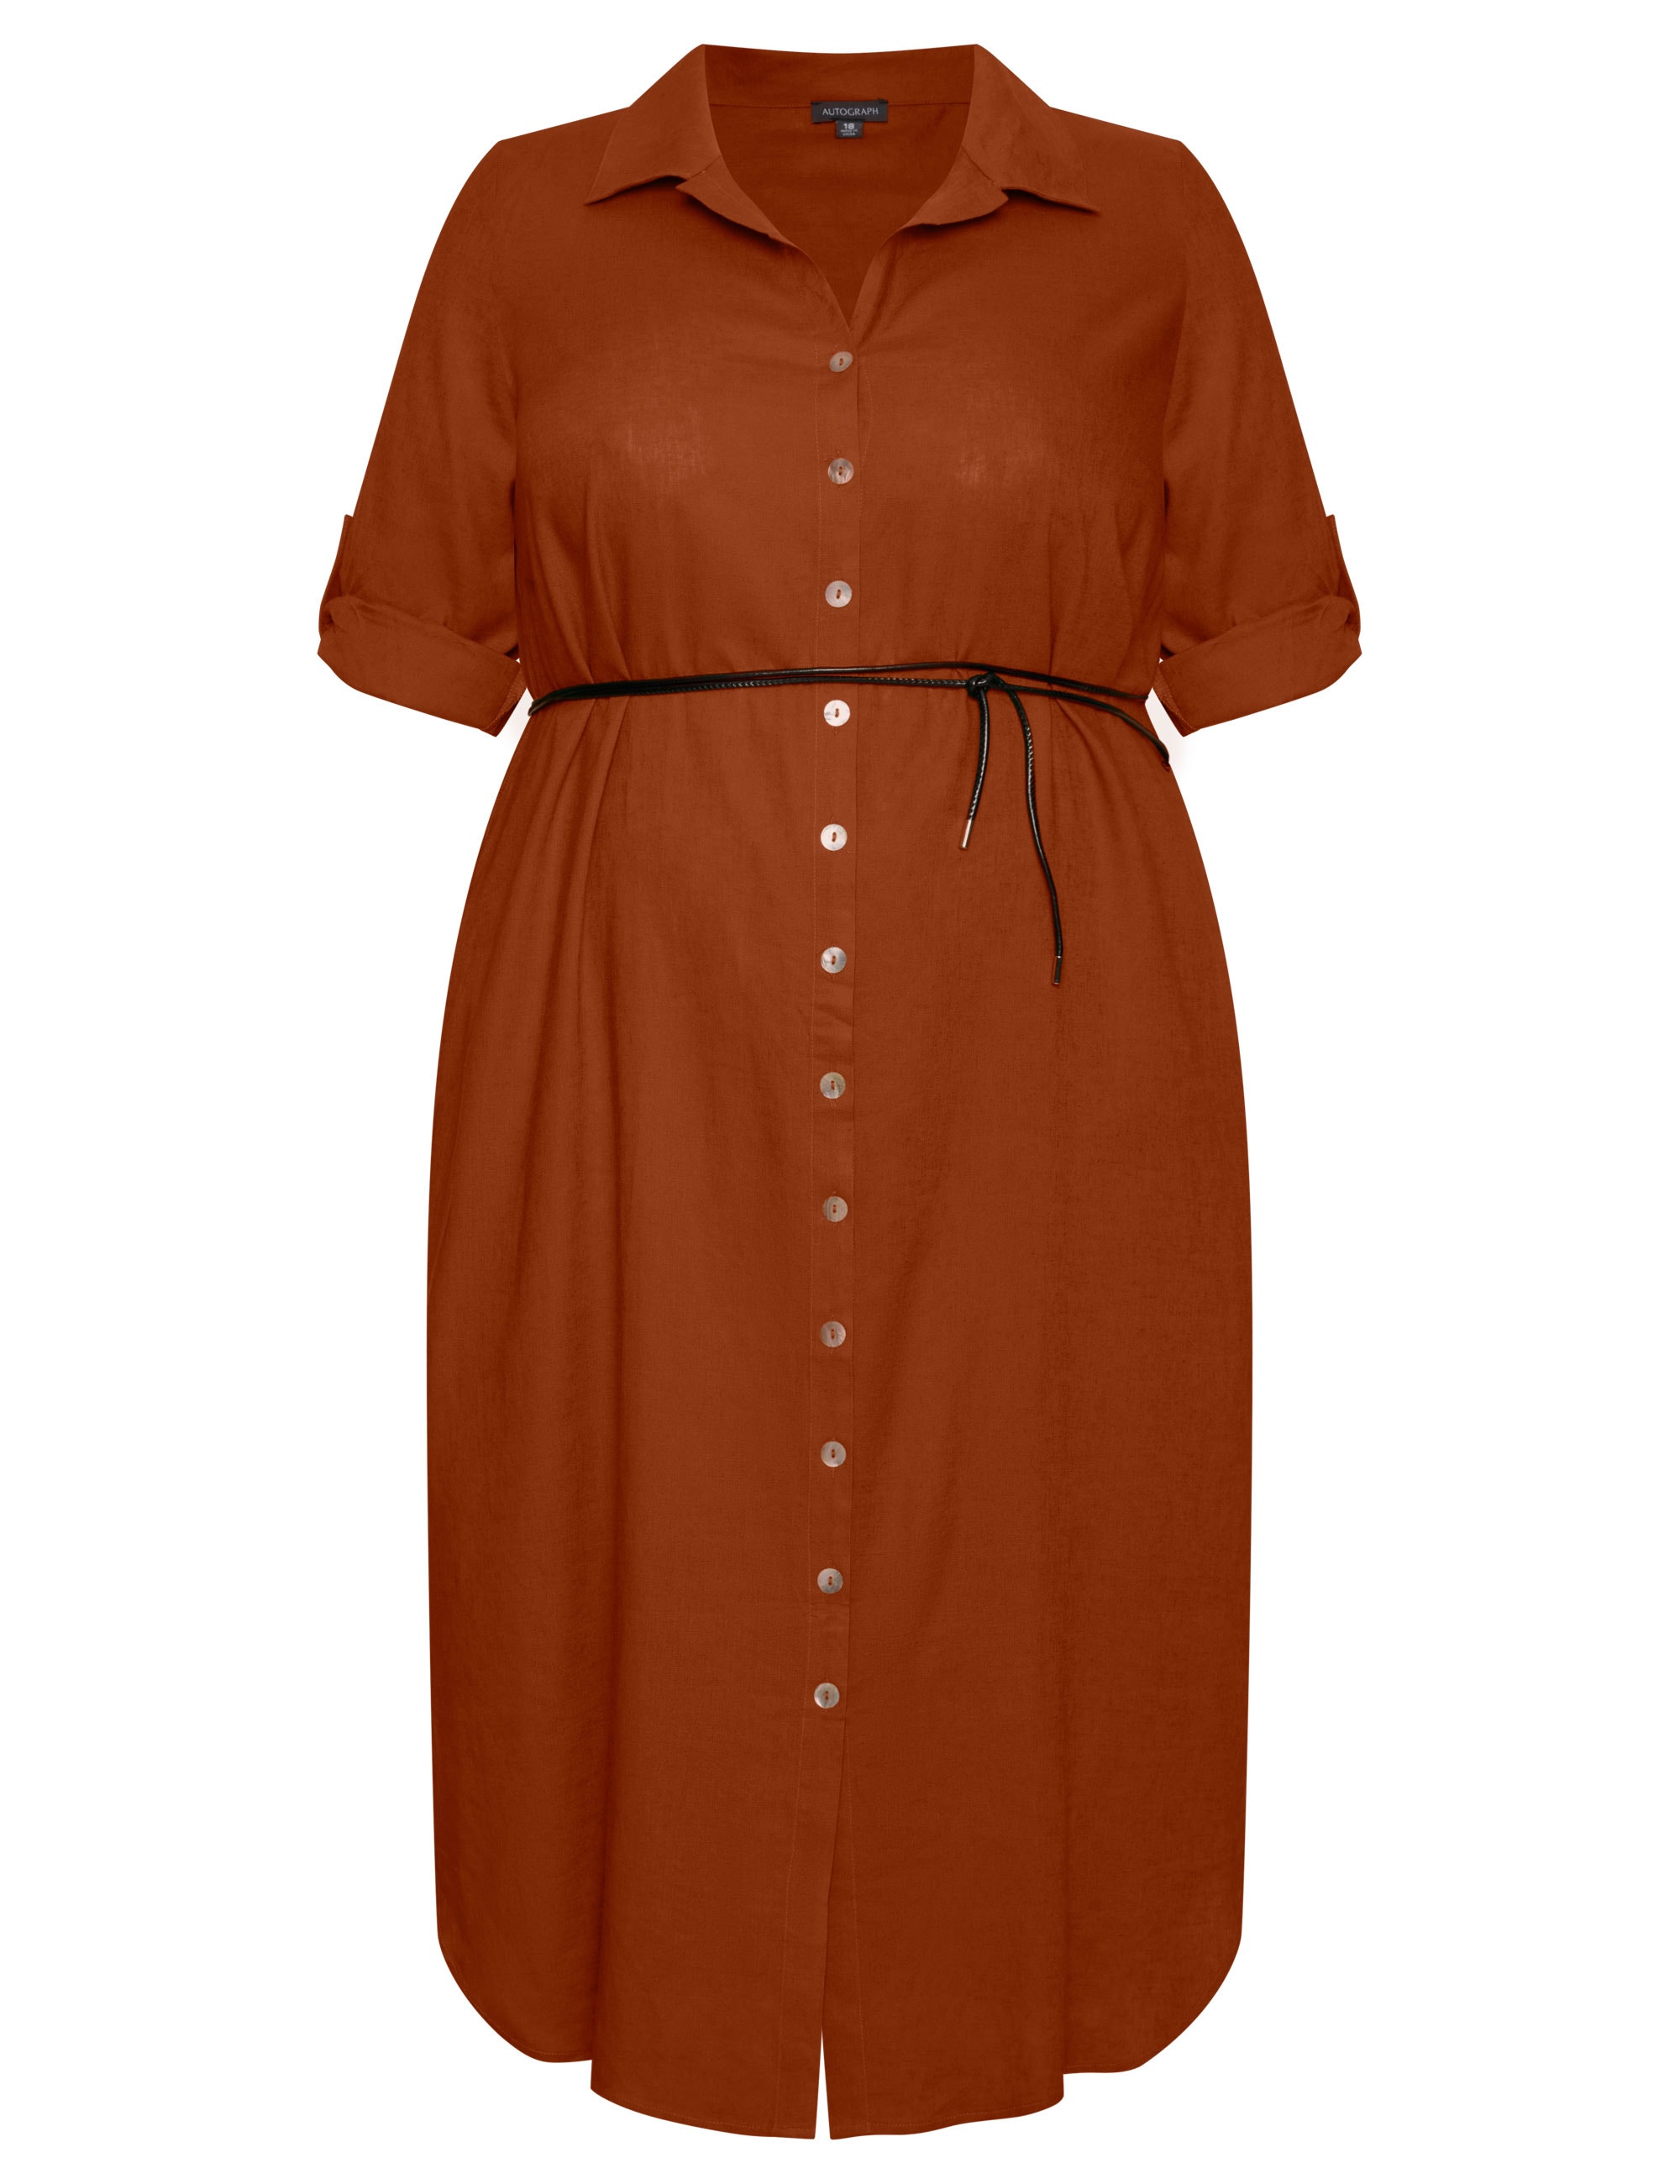 AUTOGRAPH - Plus Size - Womens Midi Dress - Brown - Summer Casual